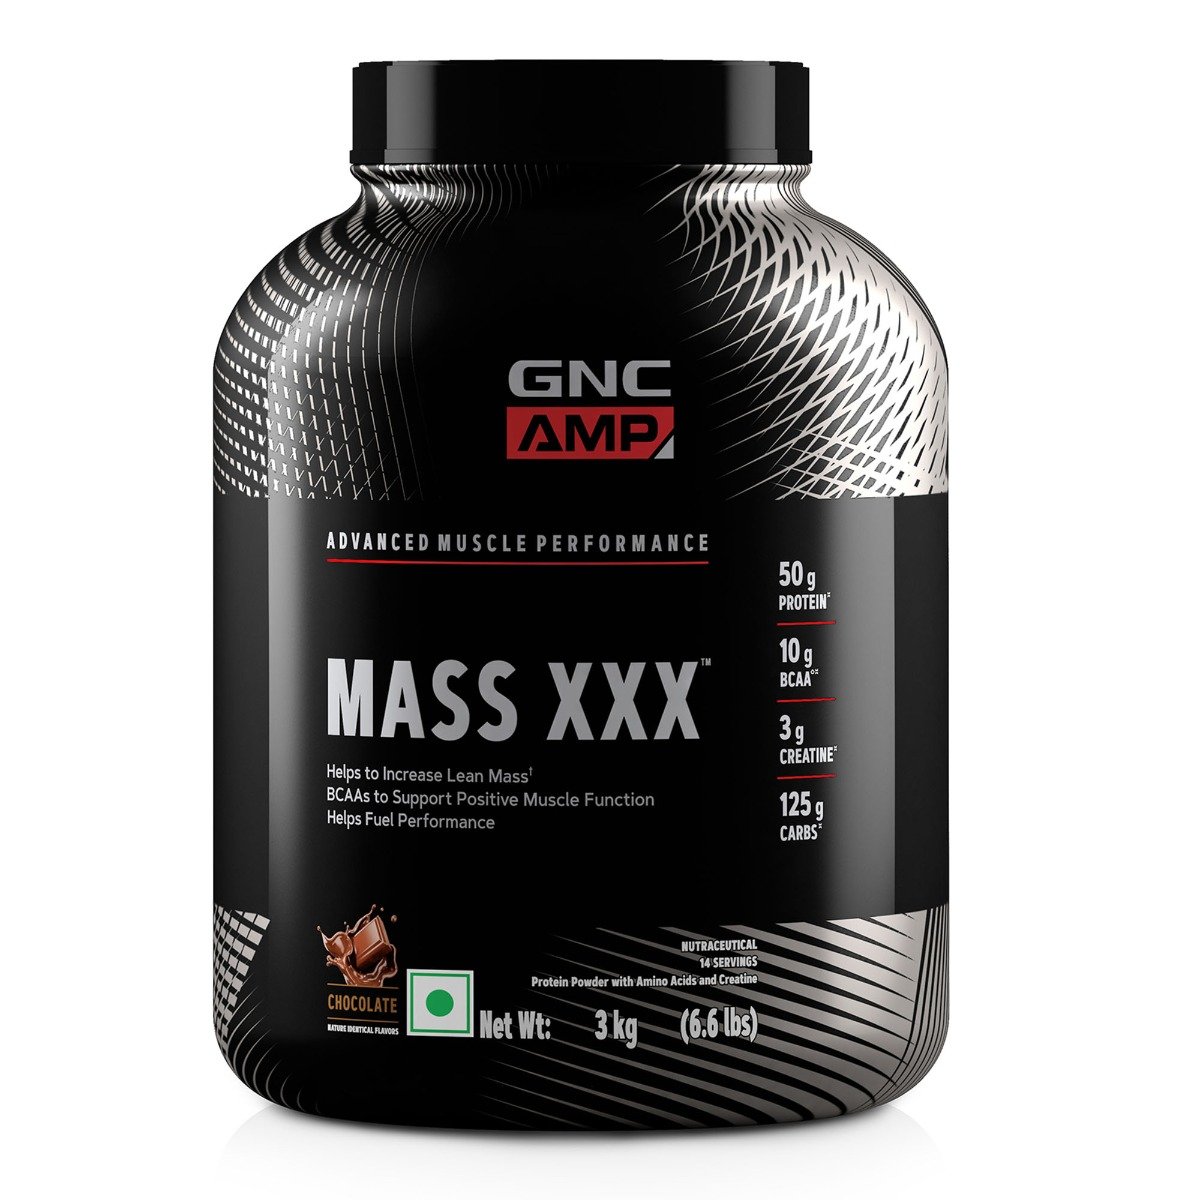 gnc-amp-amplified-mass-xxx-6-6-lbs-3-kg-chocolate-good-protein